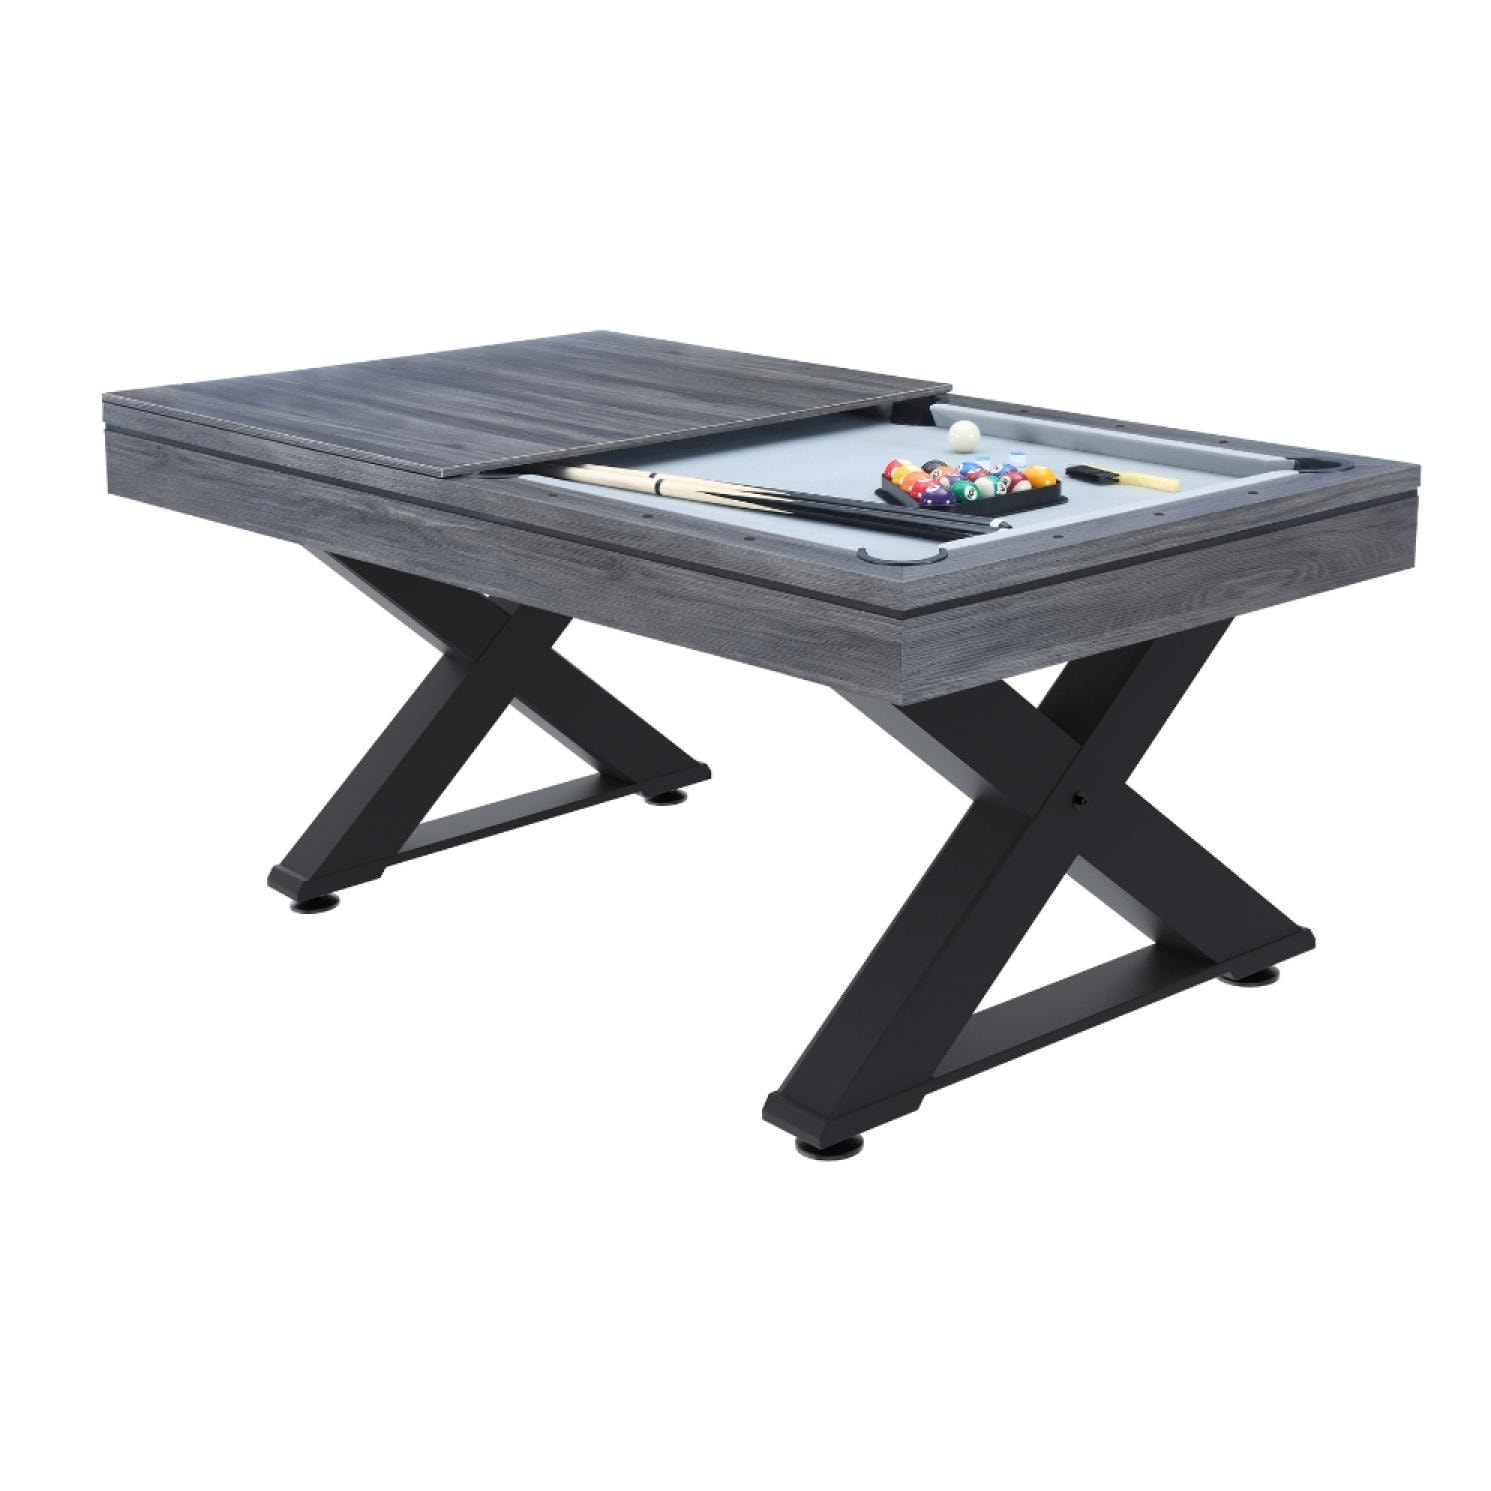 Table multi-jeux, ping-pong et billard en bois gris ARIZONA